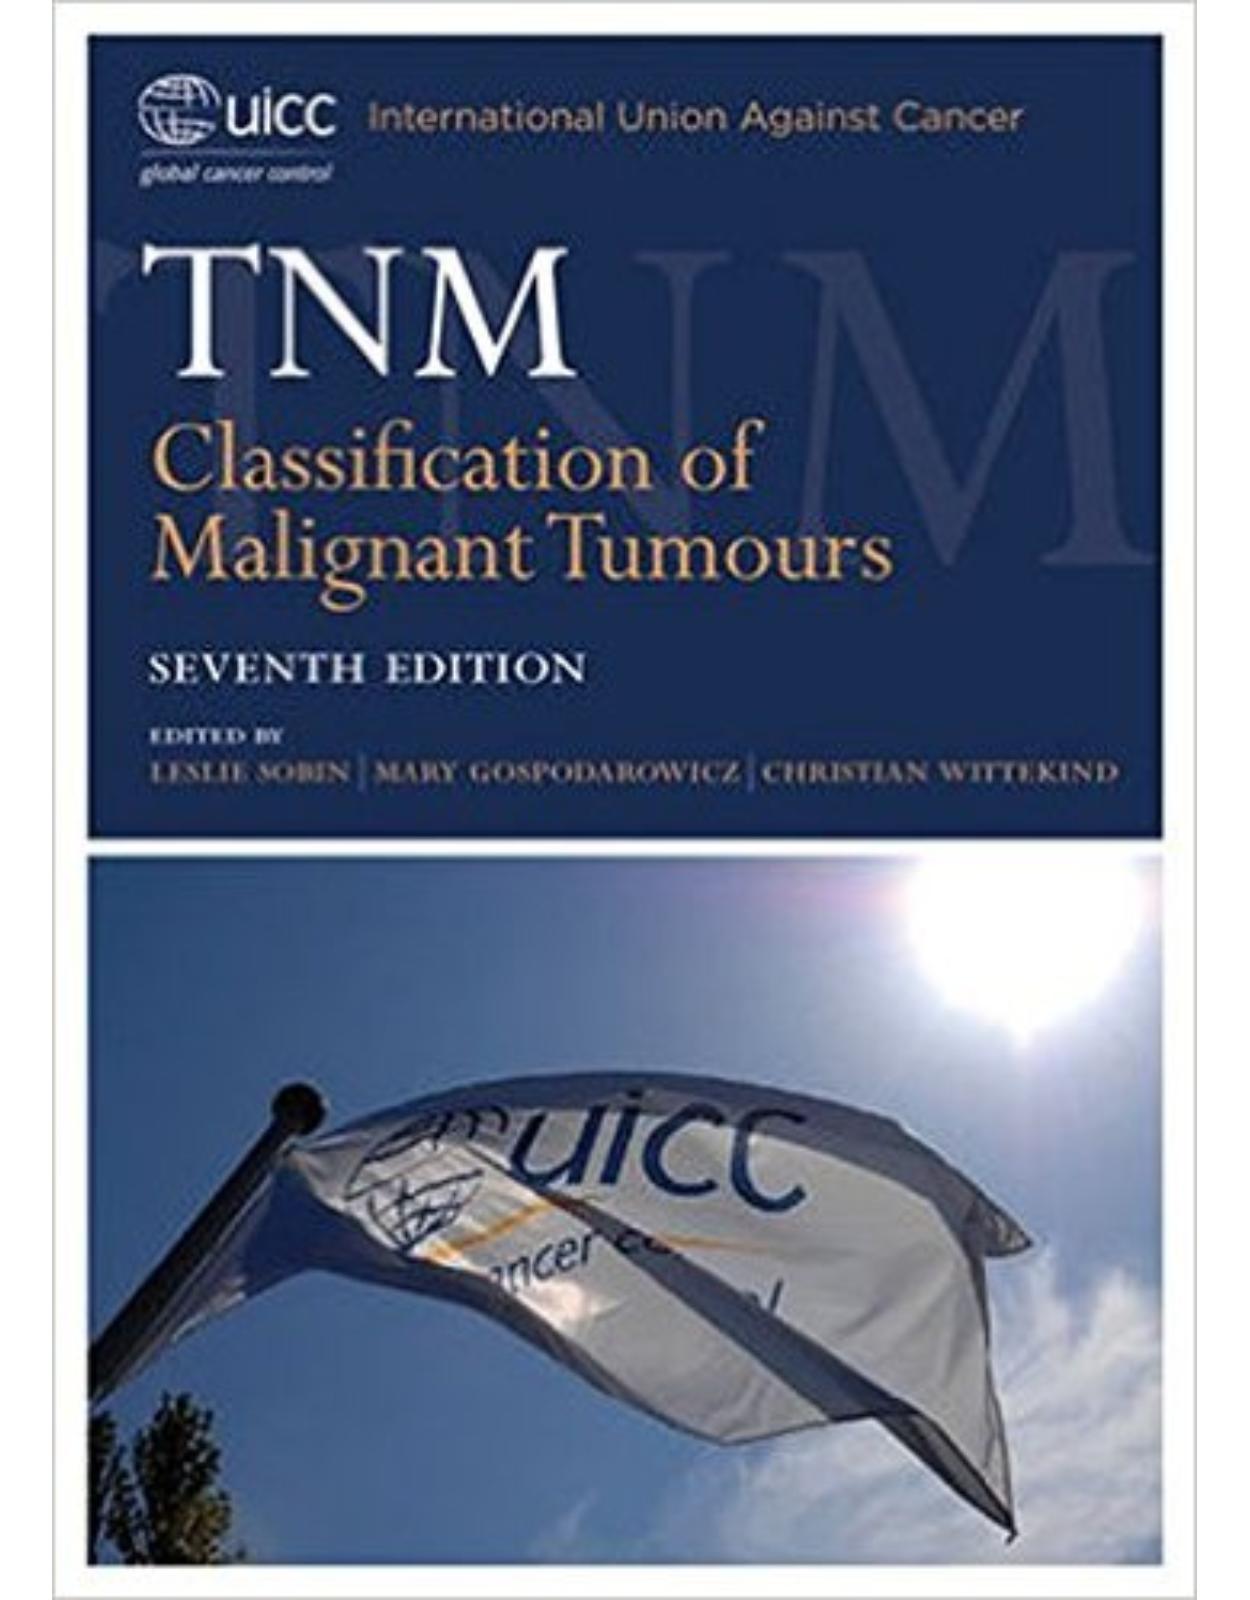 TNM Classification of Malignant Tumours (Uicc International Union Against Cancer)